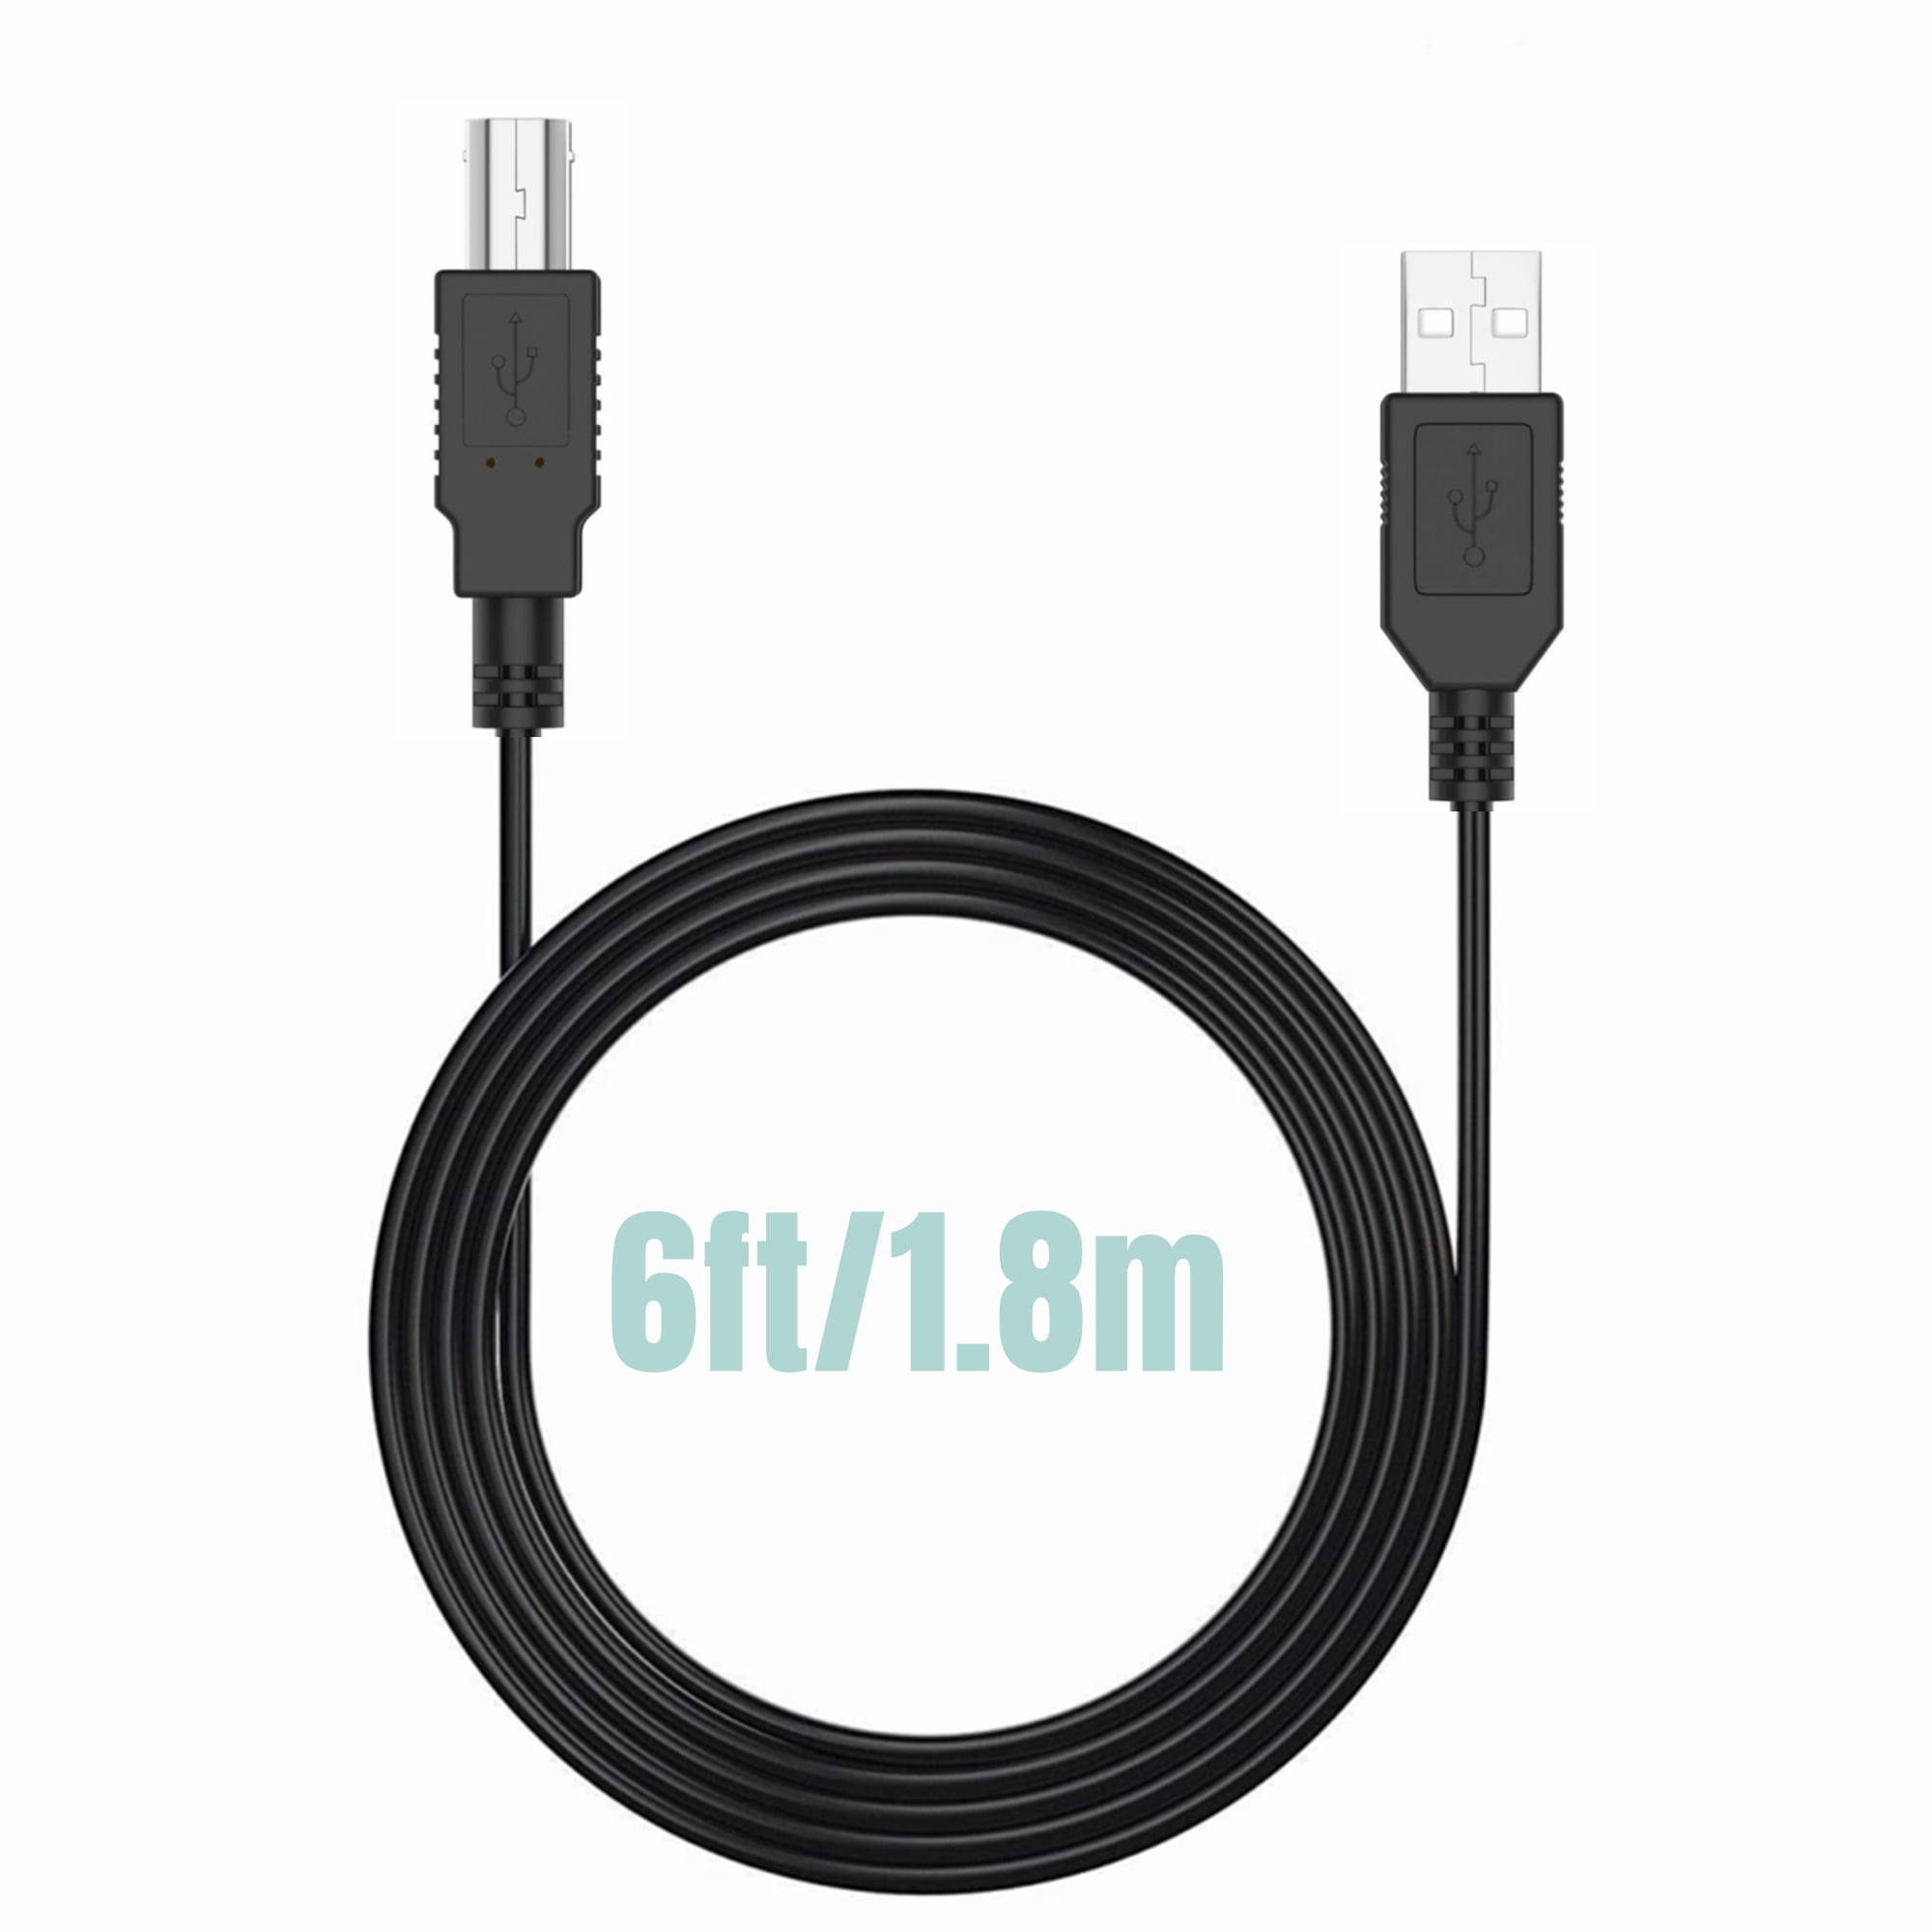 USB CABLE CORD FOR HP DESKJET PRINTER 1010 1112 2130 3755 F2110 D1460 F2480